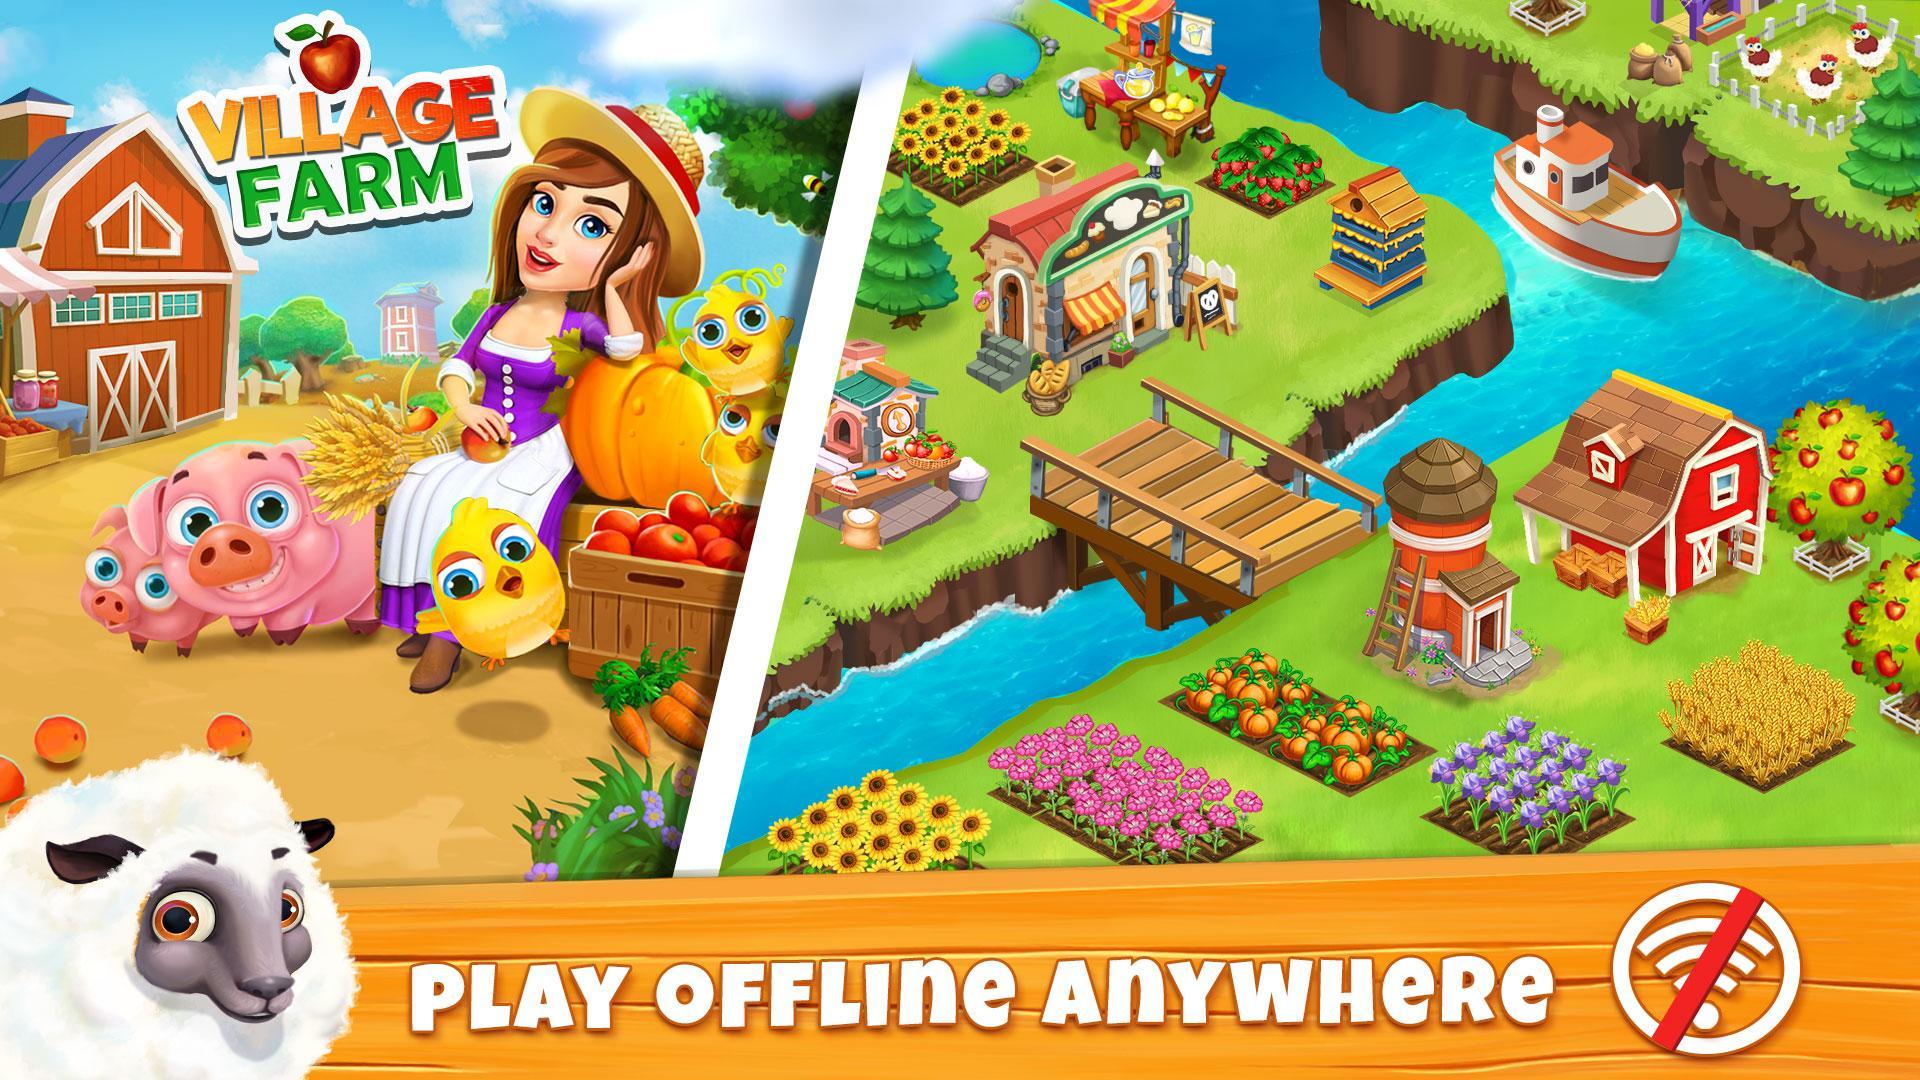 Village Farm Free Offline Farm Games For Android Apk Download